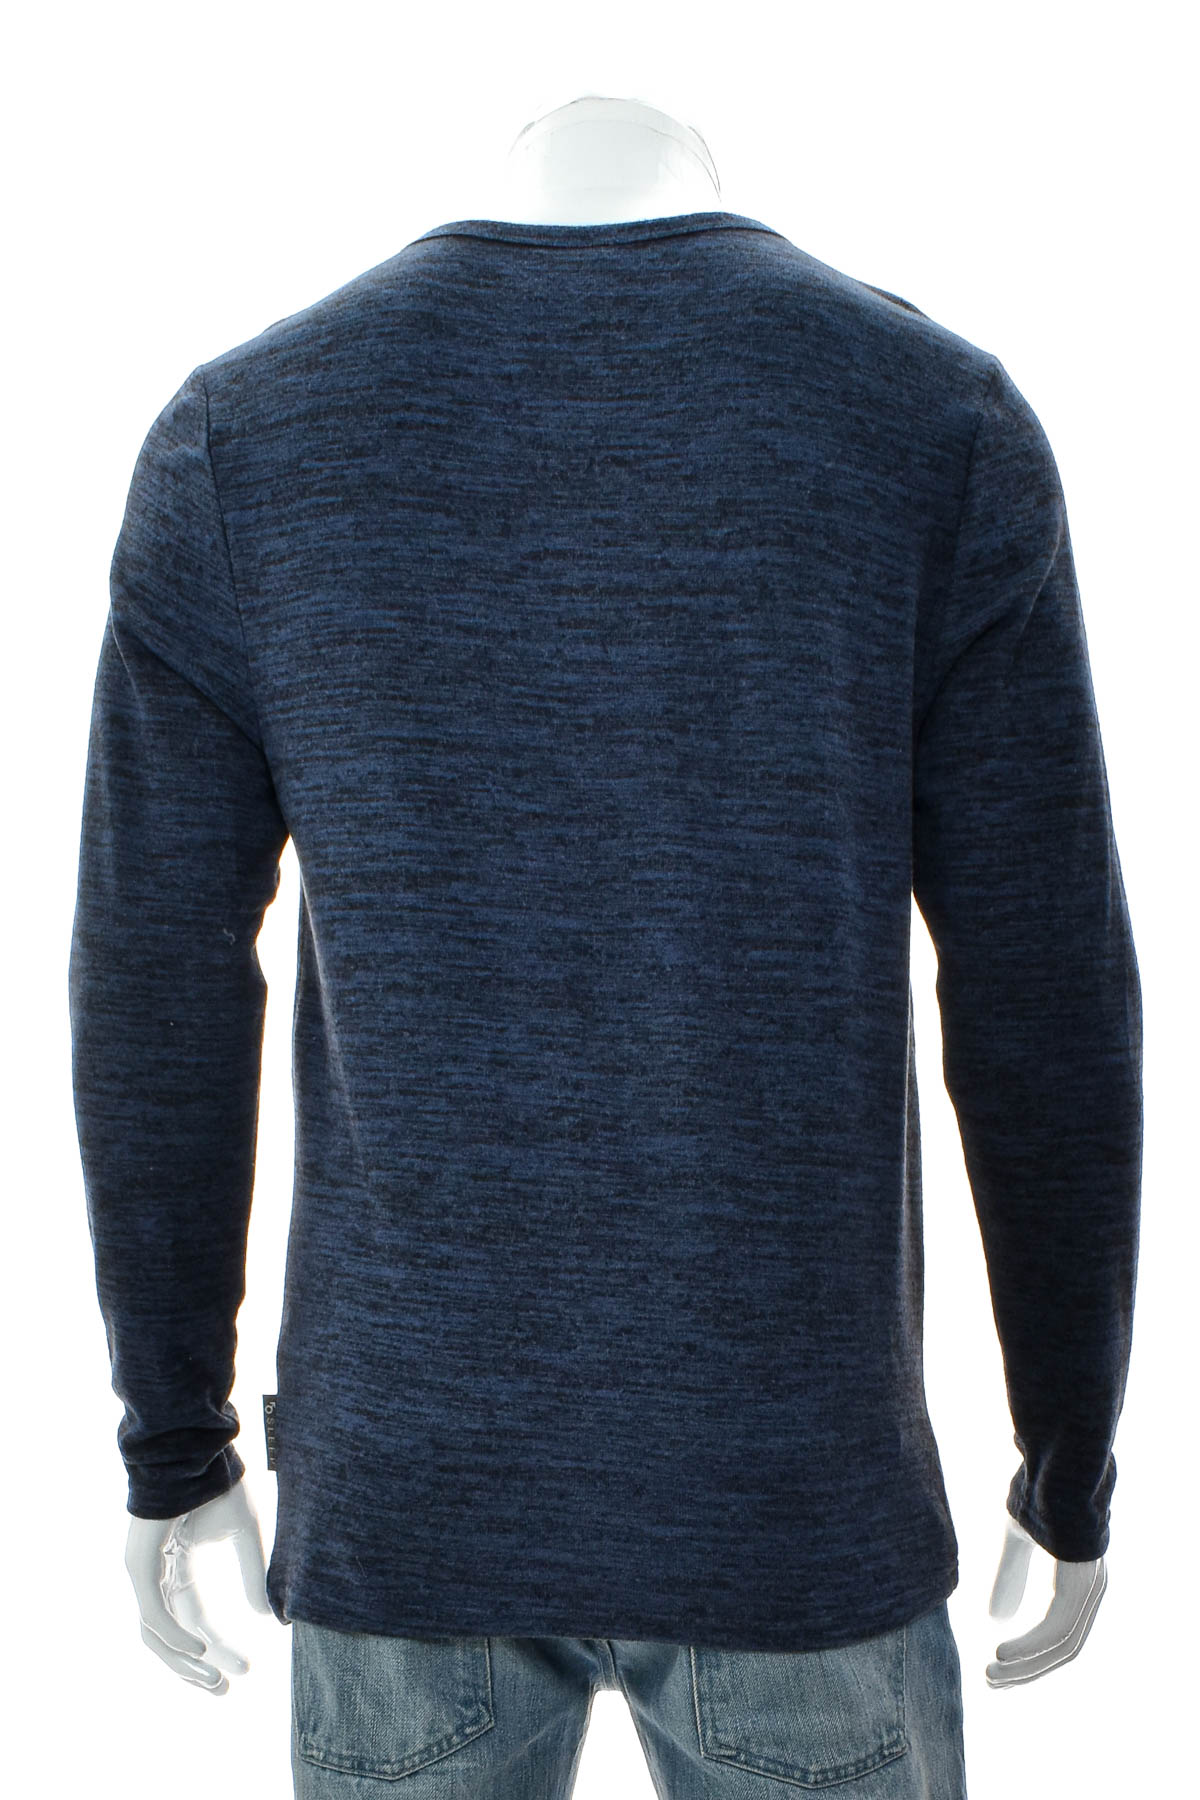 Men's sweater - Anko - 1